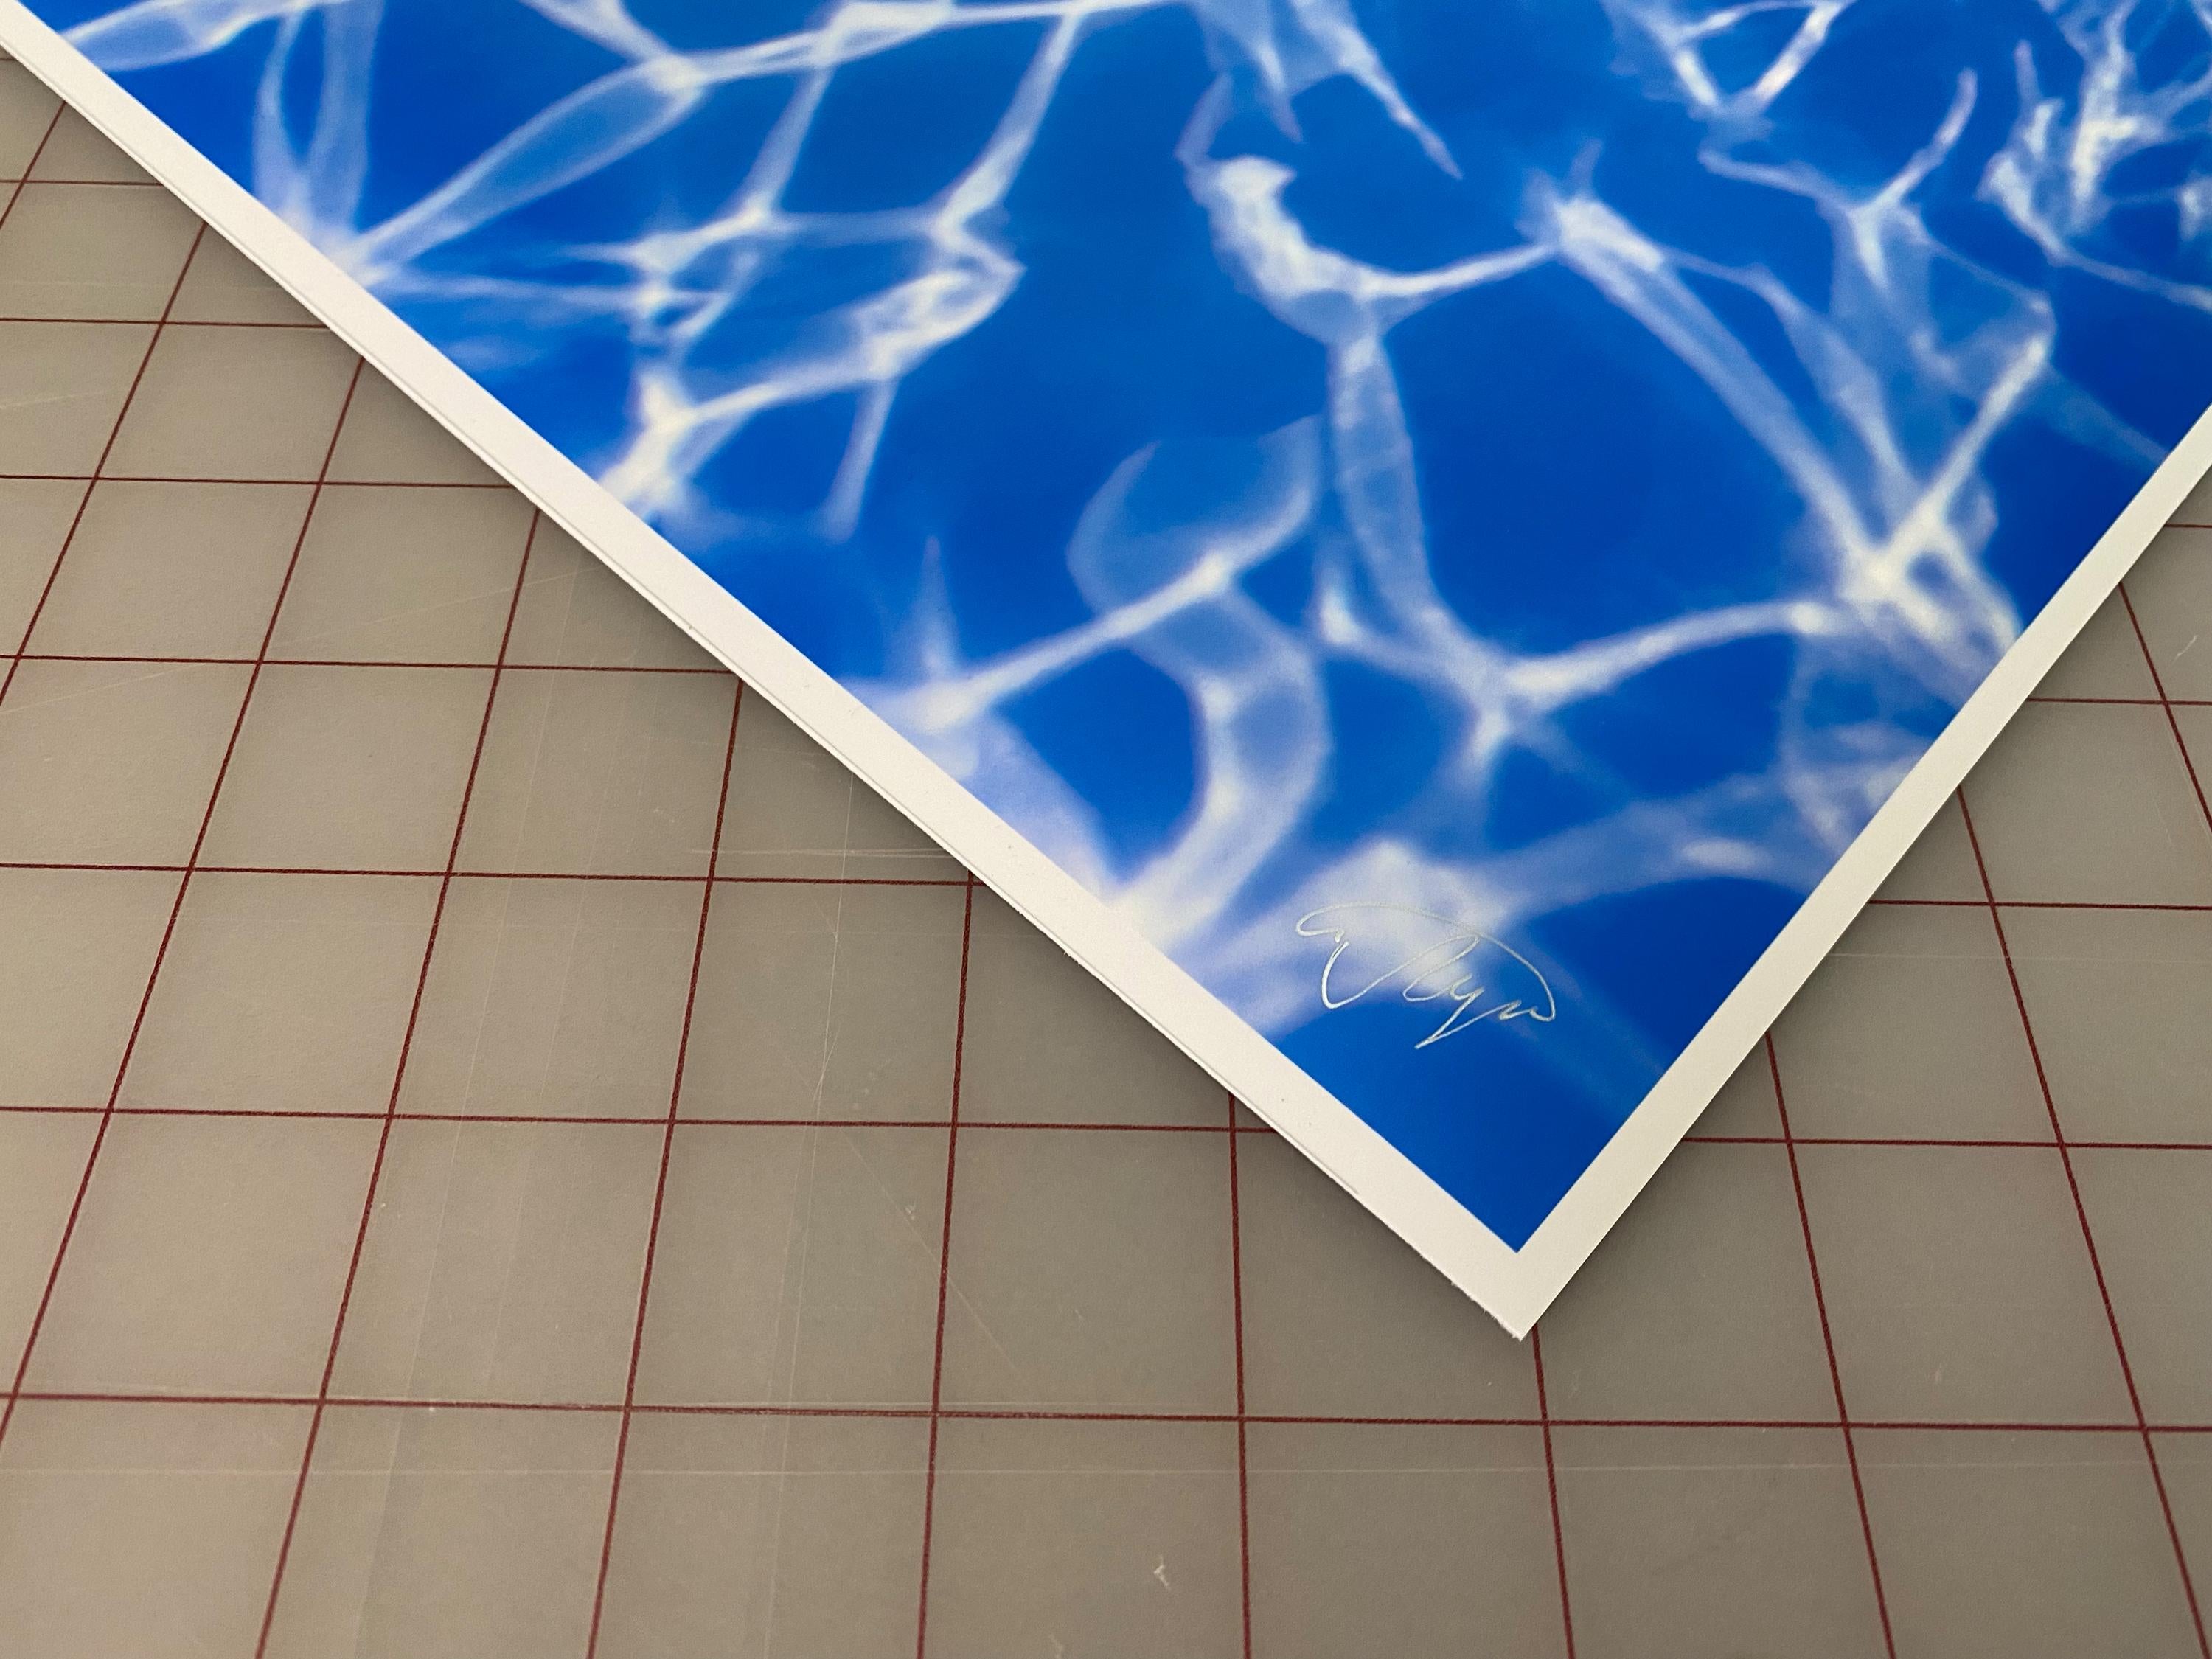 Fluorescence - underwater nude photograph - archival pigment print 26